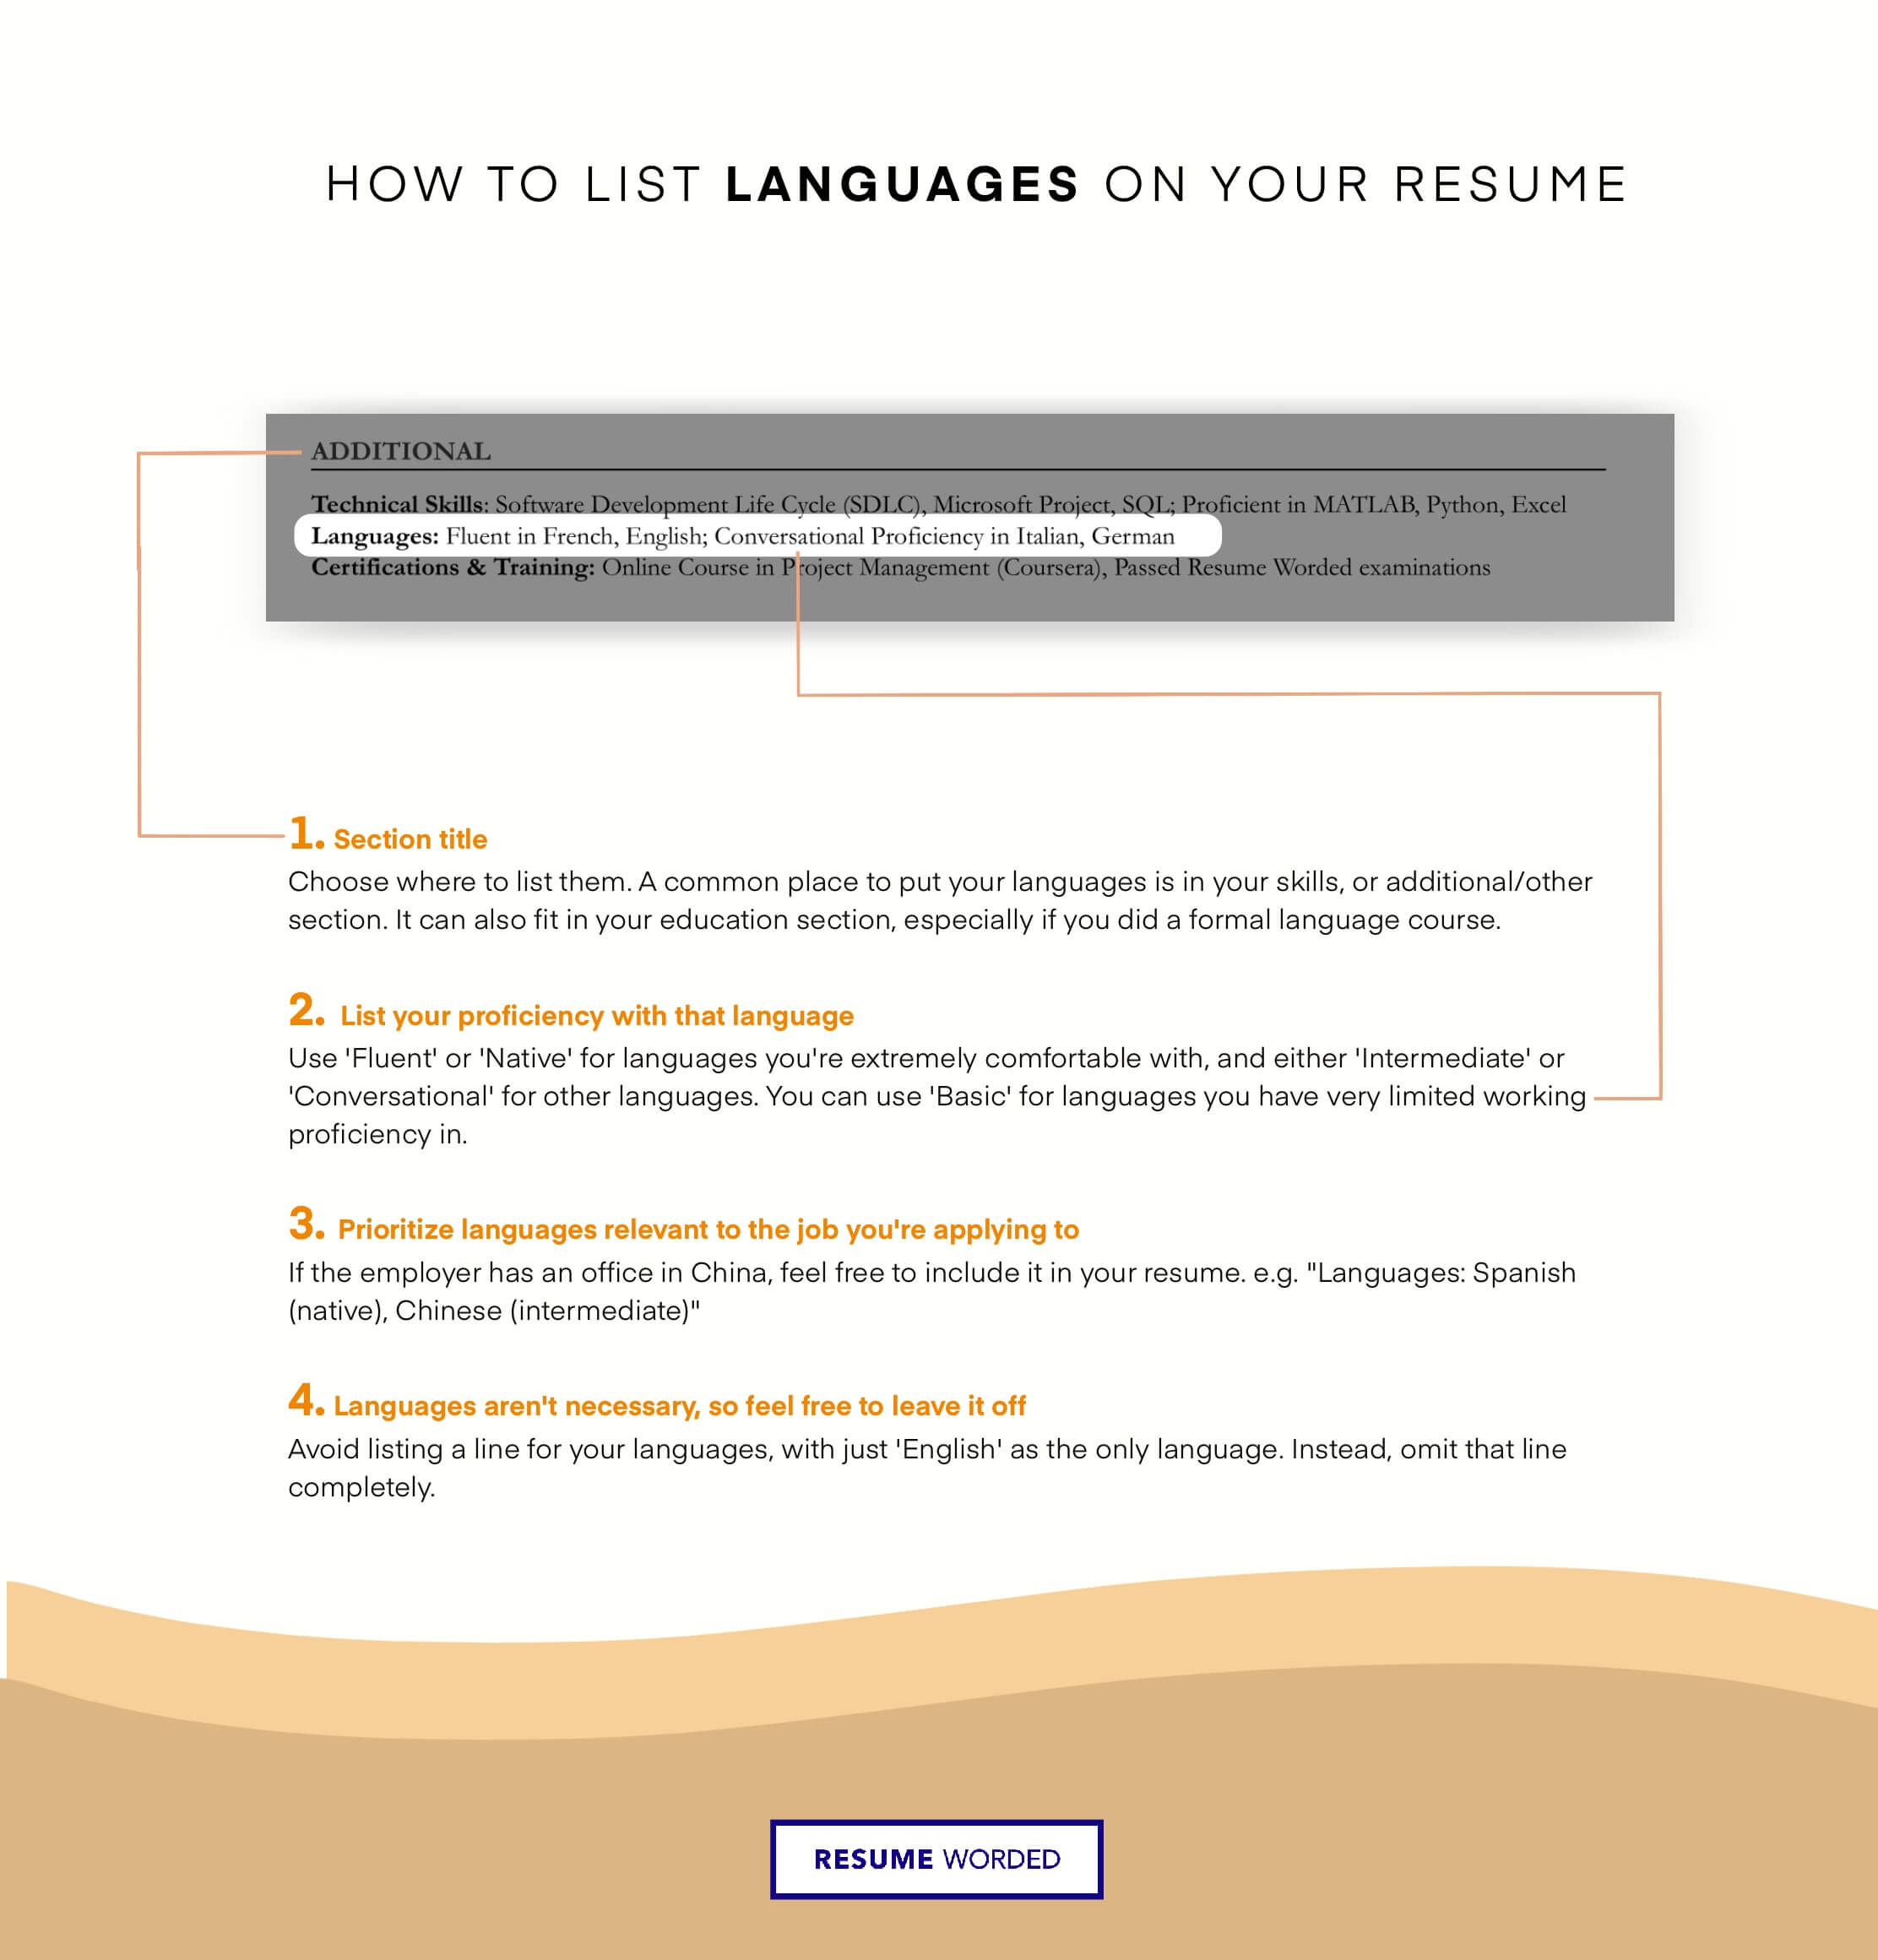 Details the ability to speak more than one language - Senior Scrum Master Resume